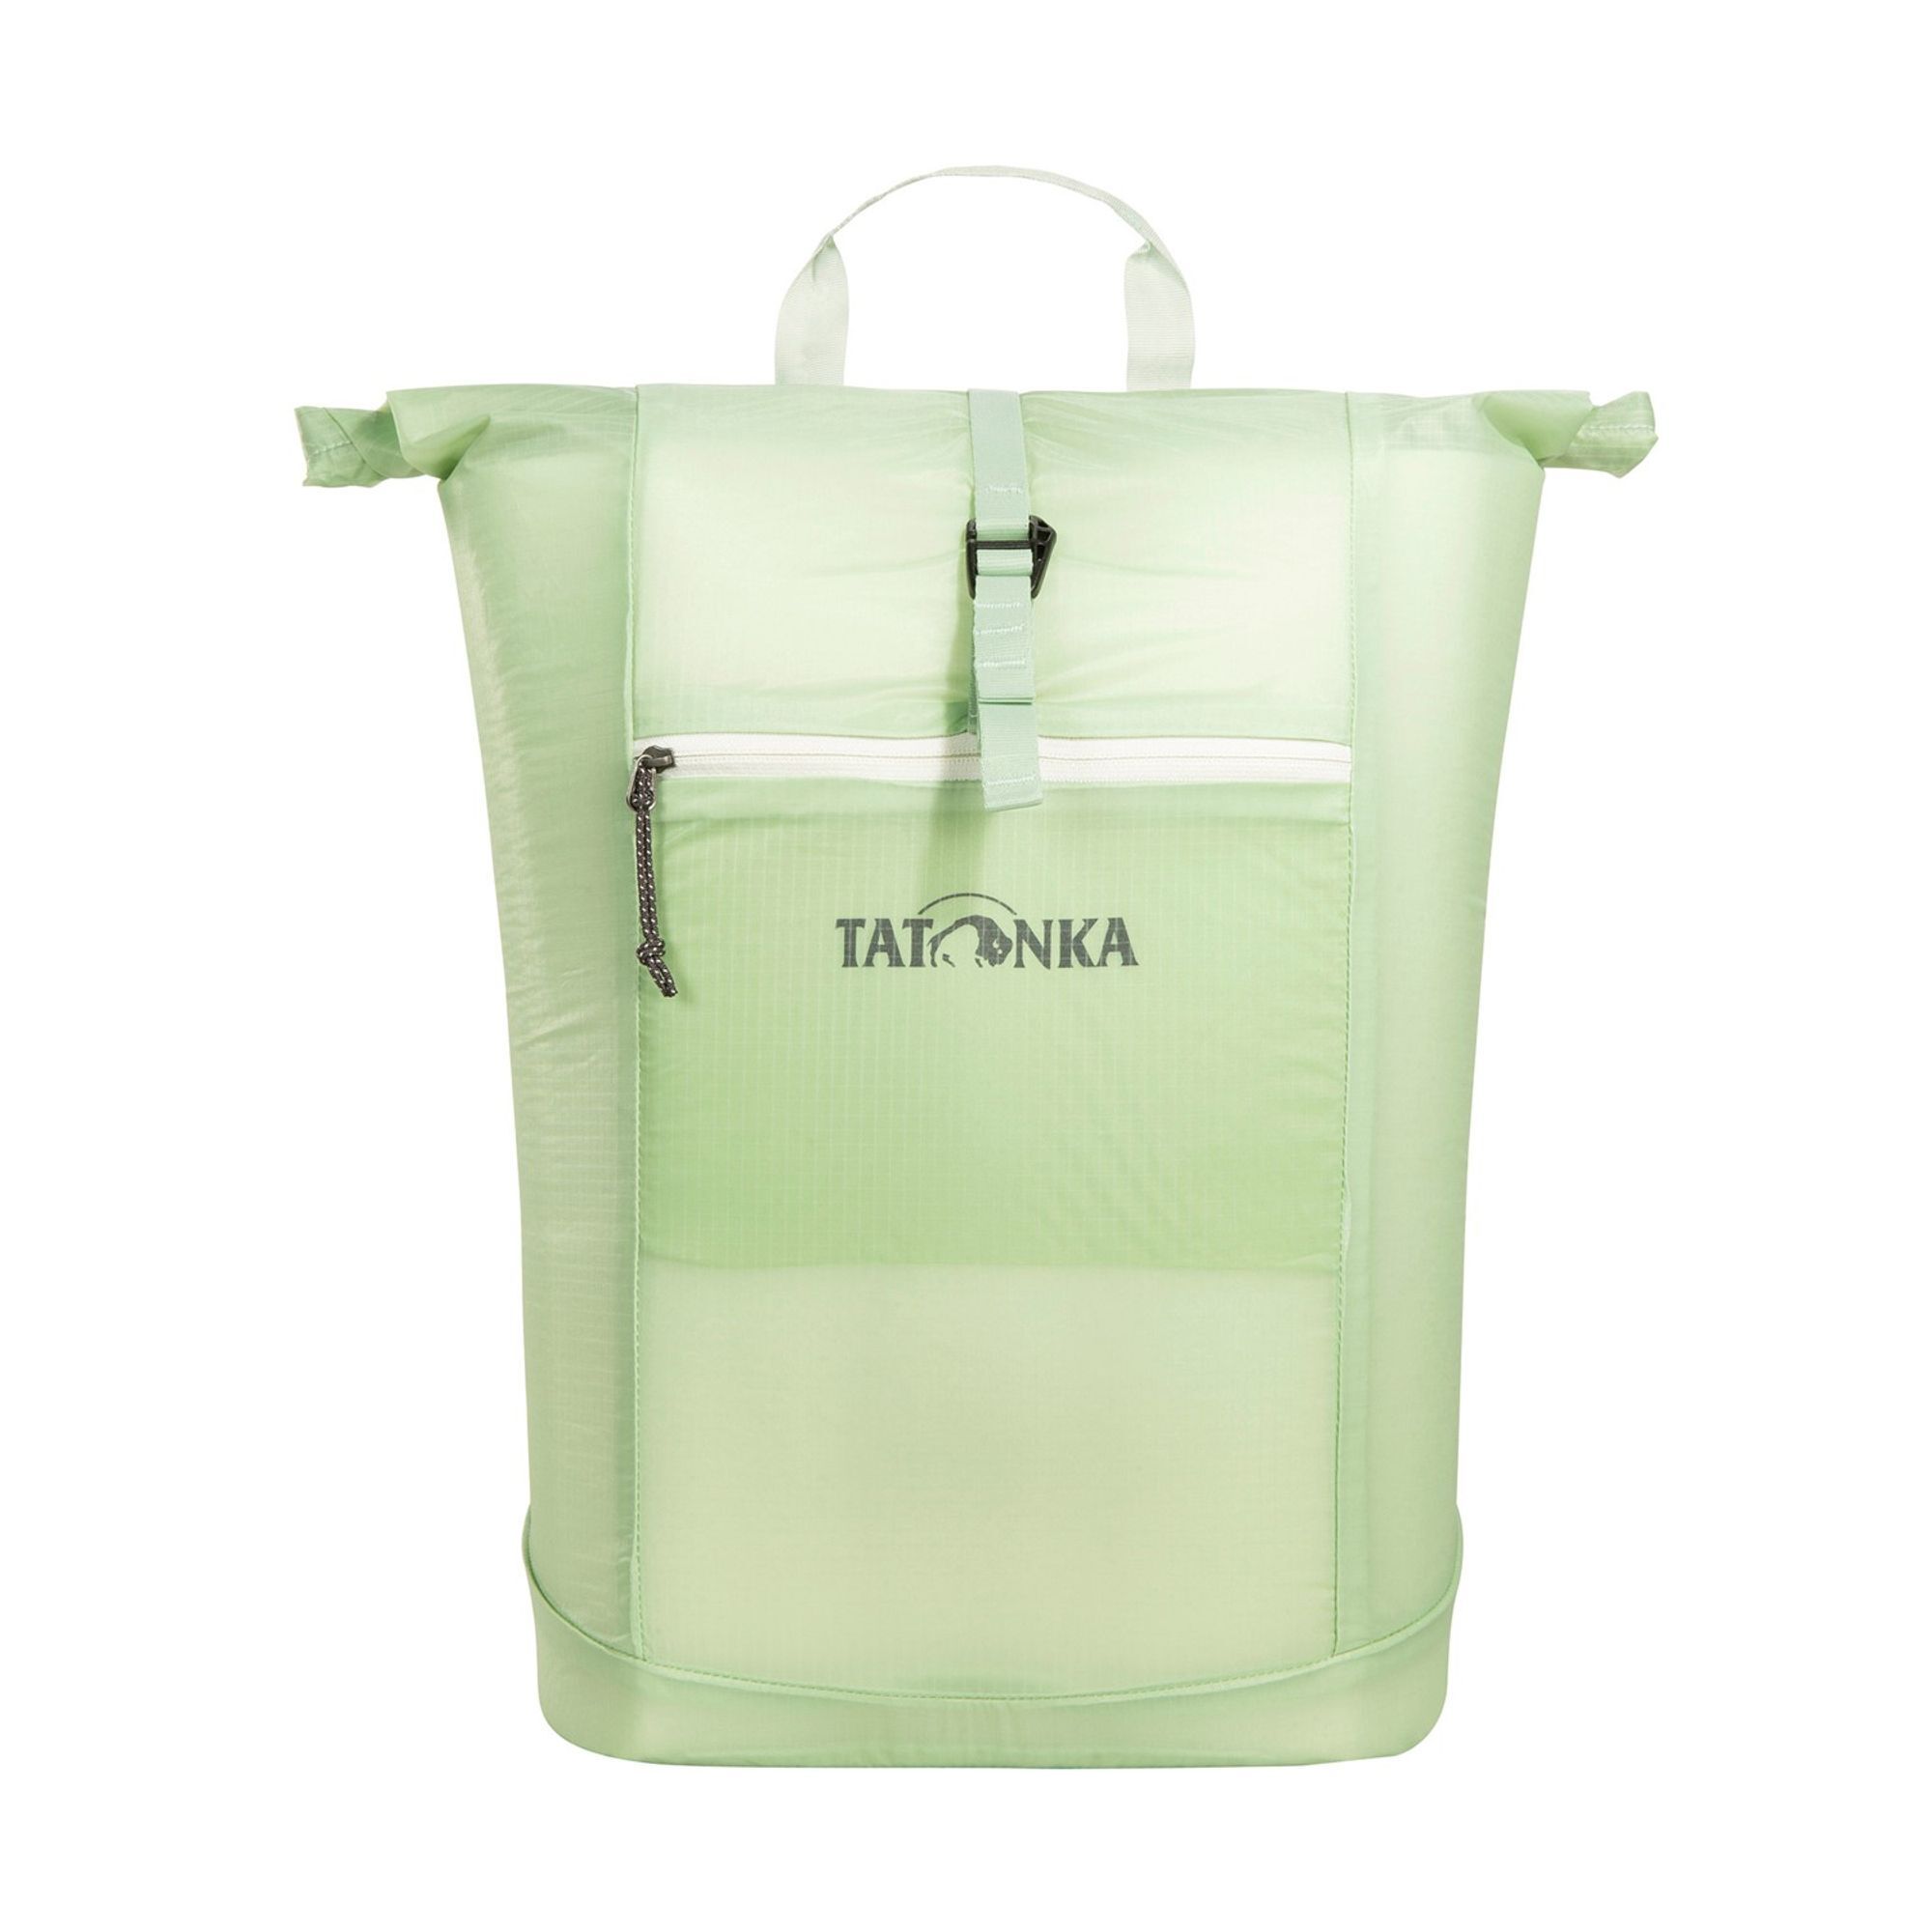 Рюкзак Tatonka SQZY 42 cm, цвет lighter green рюкзак tatonka sqzy 42 cm цвет lighter green